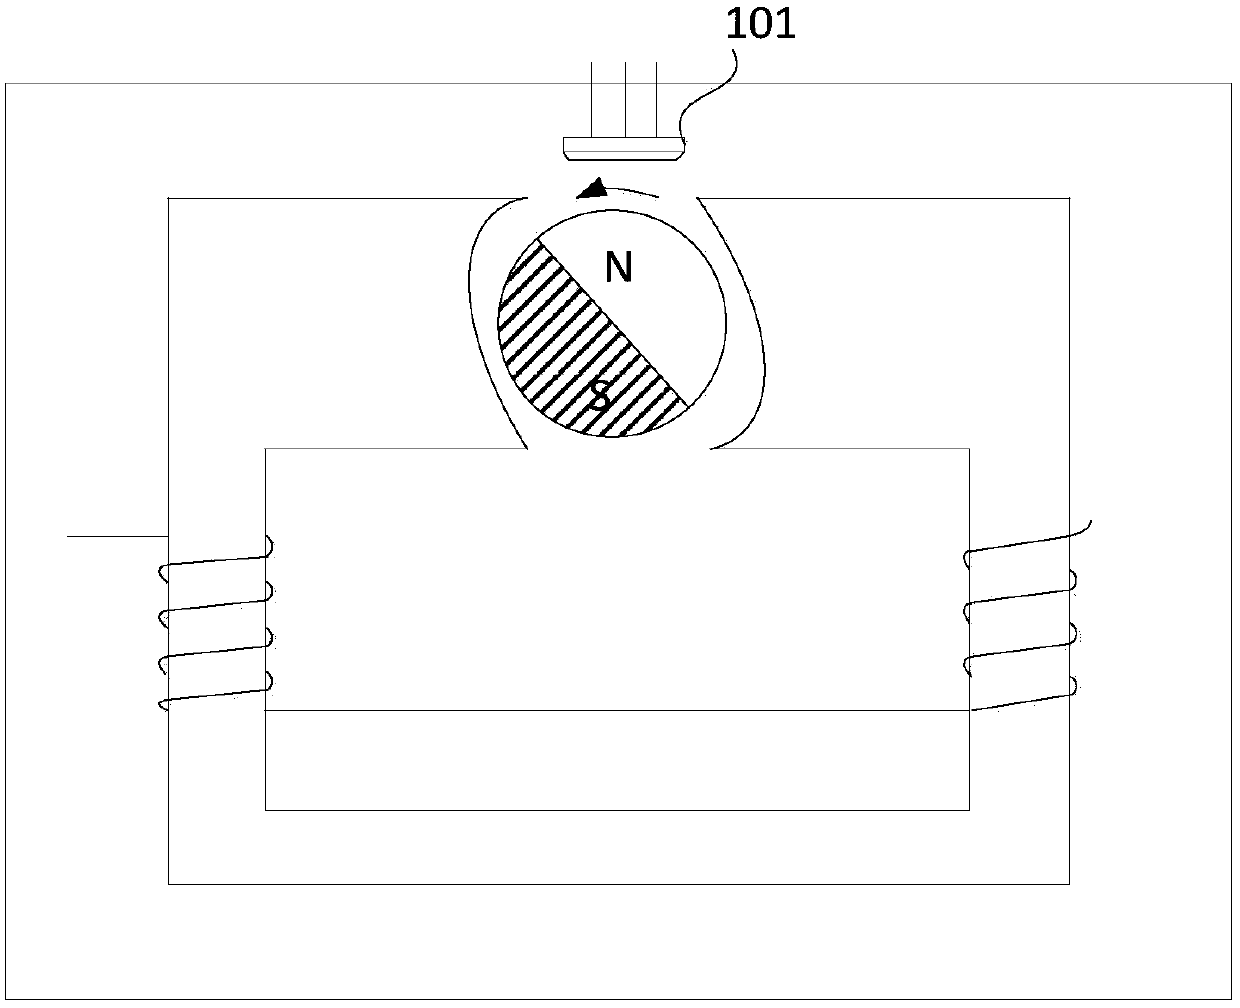 Control method for single-phase brushless motor